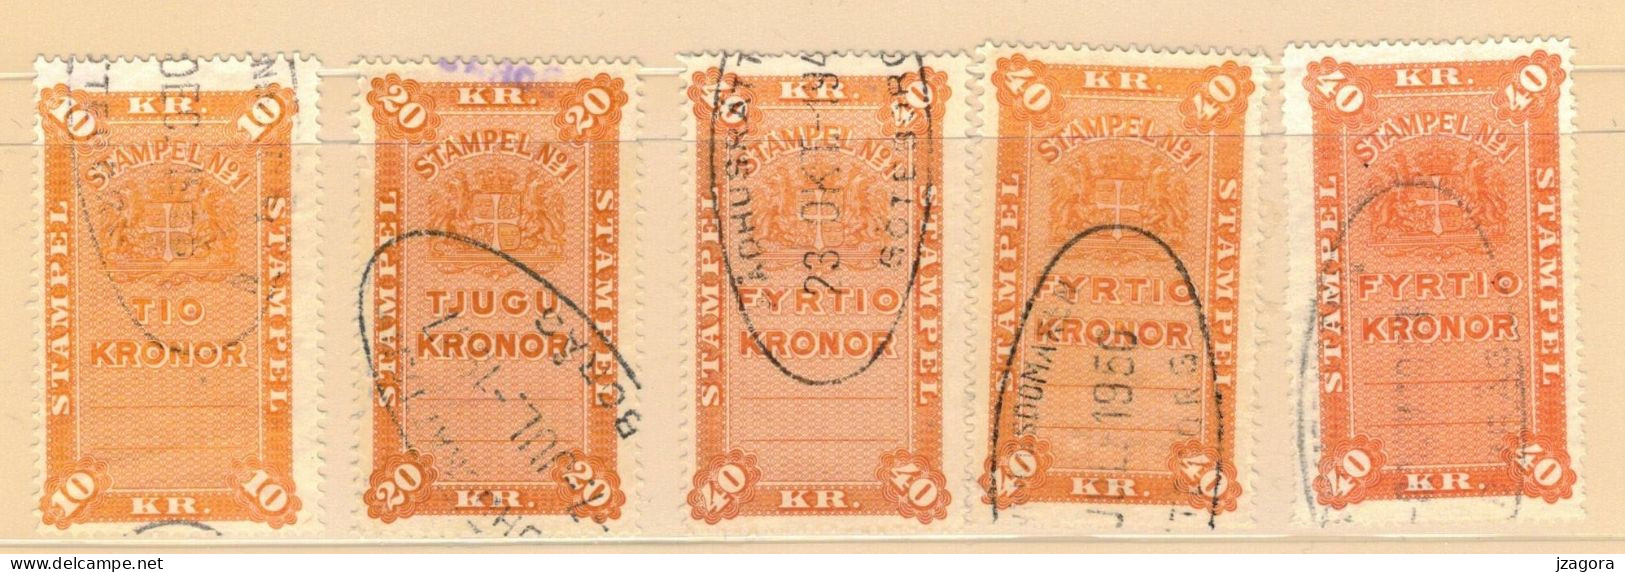 TAX REVENUE STEMPELMERKE STEUERMARKE TIMBRE FISCAL SWEDEN SCHWEDE SUEDE  - StämpelNo1 - Revenue Stamps